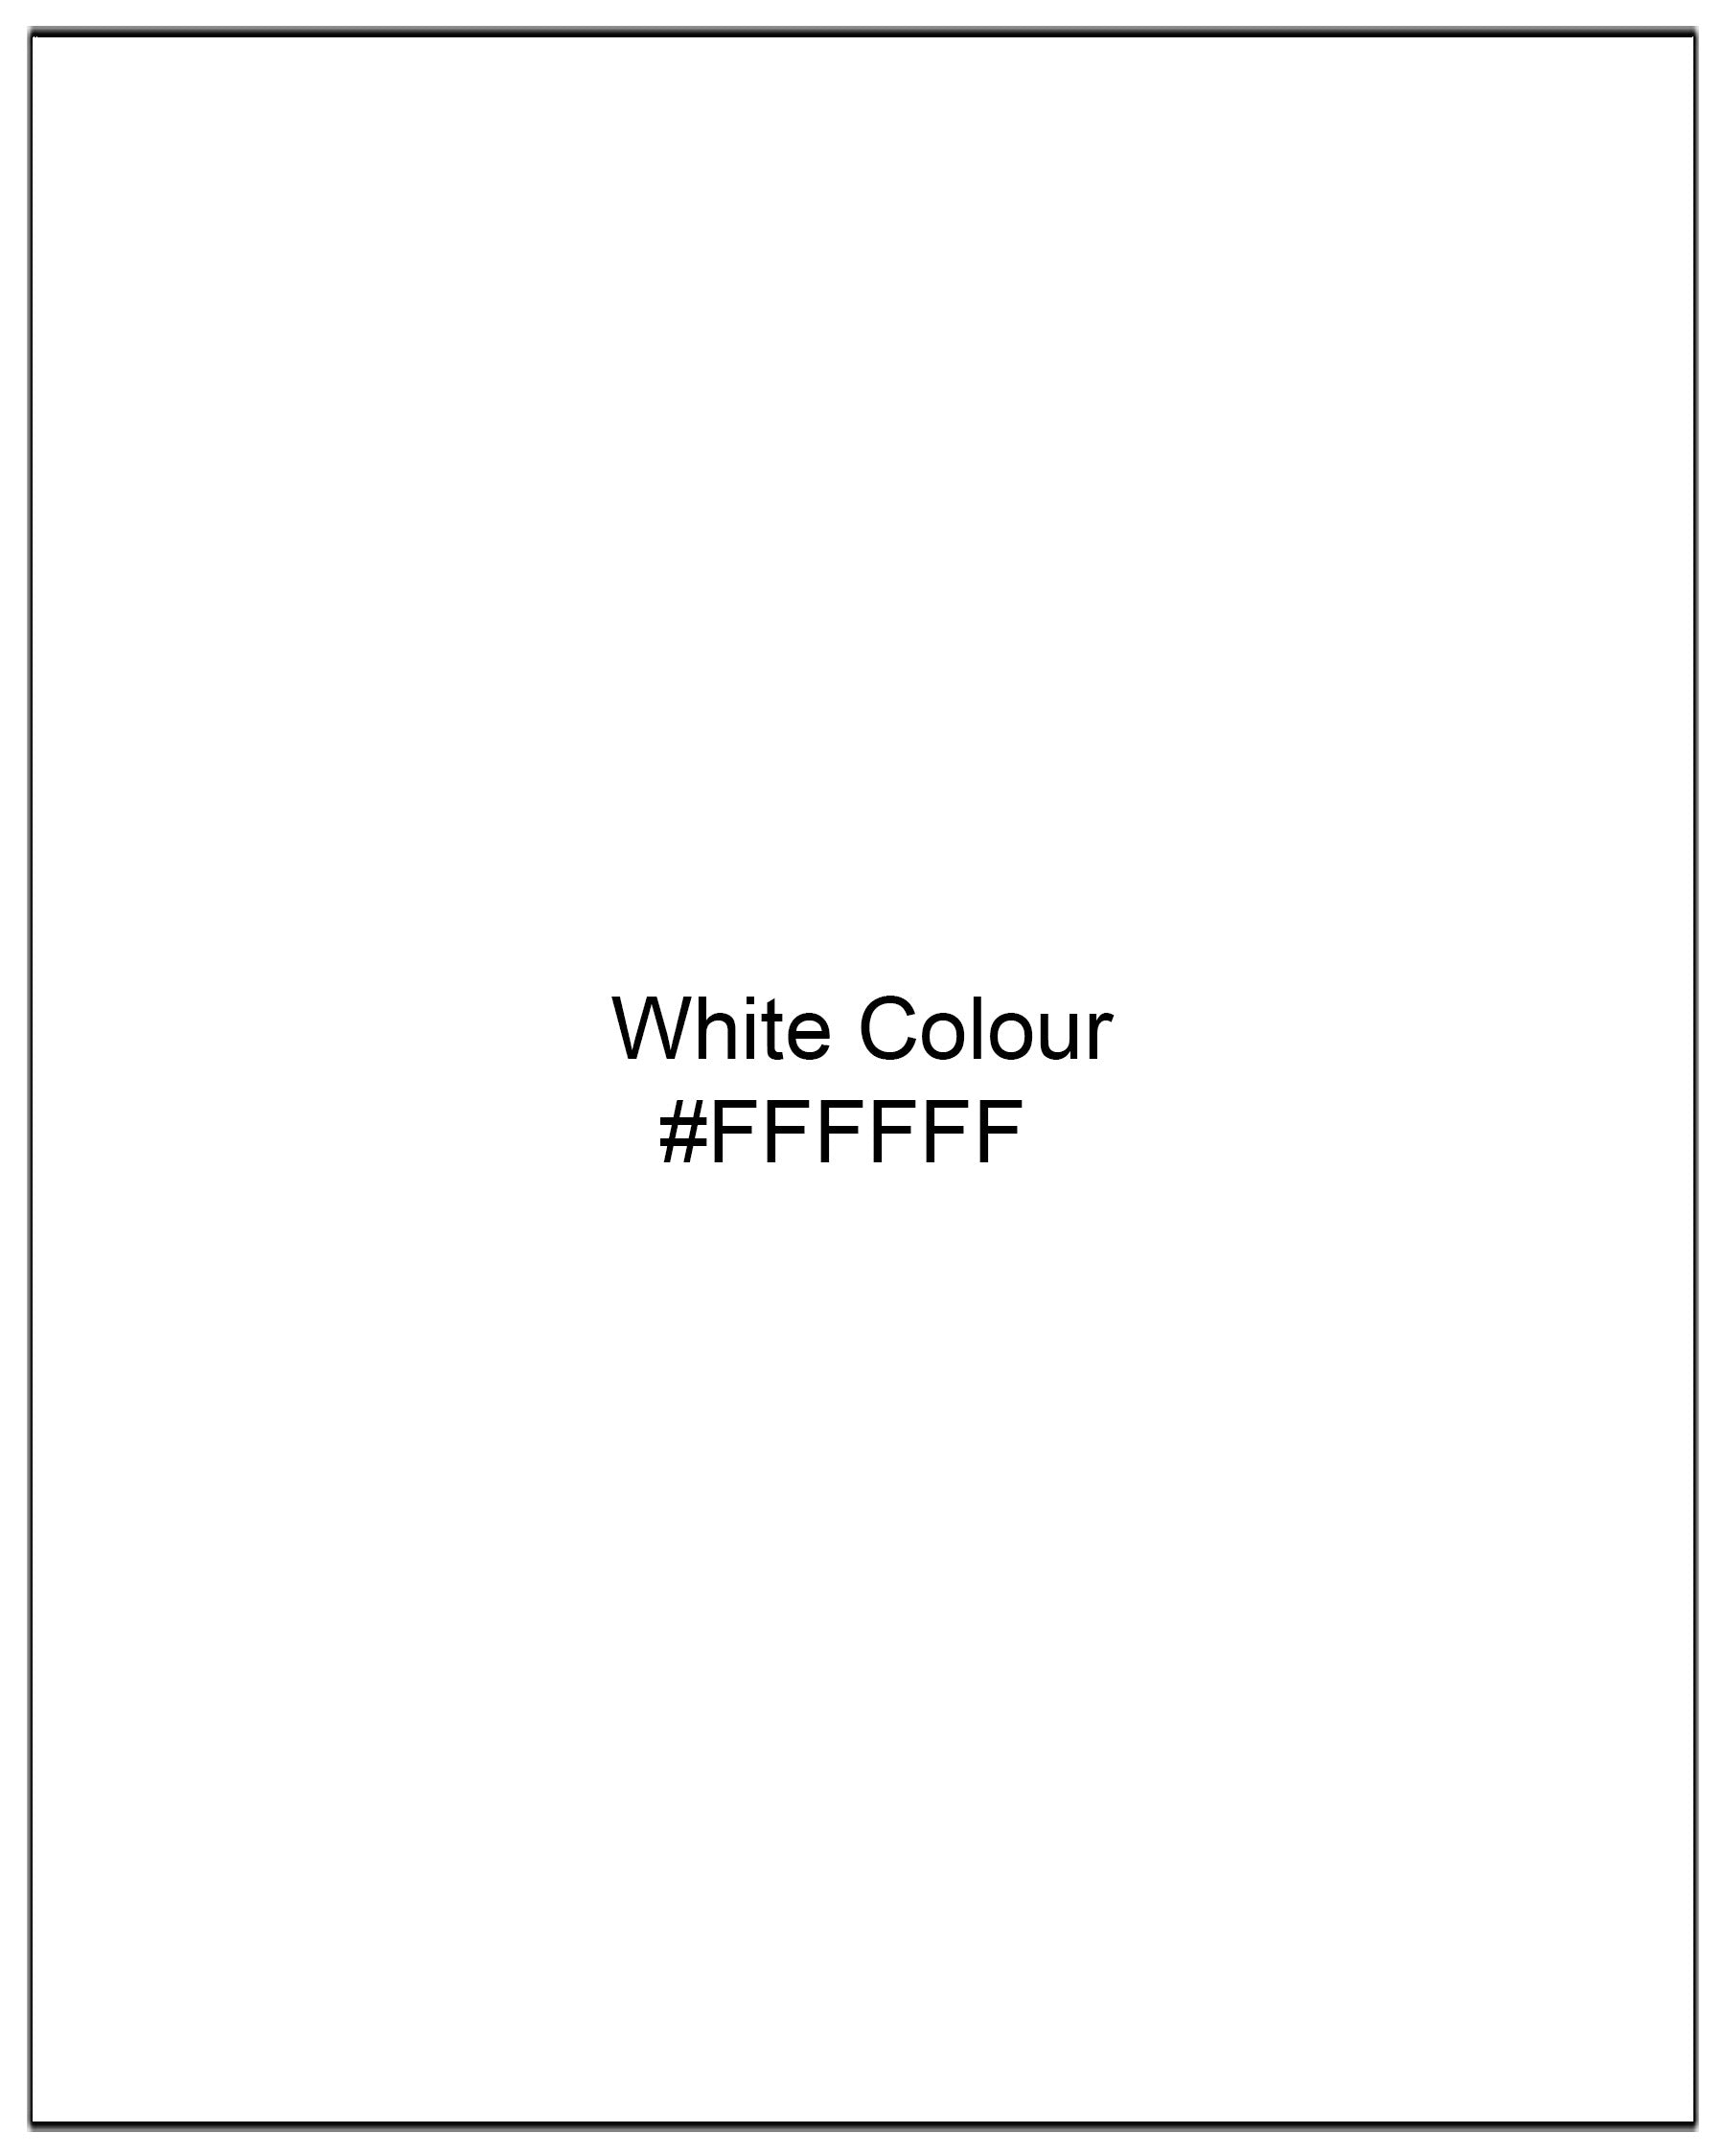 Bright White Dobby Textured Premium Giza Cotton Shirt 7700-CA-38,7700-CA-38,7700-CA-39,7700-CA-39,7700-CA-40,7700-CA-40,7700-CA-42,7700-CA-42,7700-CA-44,7700-CA-44,7700-CA-46,7700-CA-46,7700-CA-48,7700-CA-48,7700-CA-50,7700-CA-50,7700-CA-52,7700-CA-52